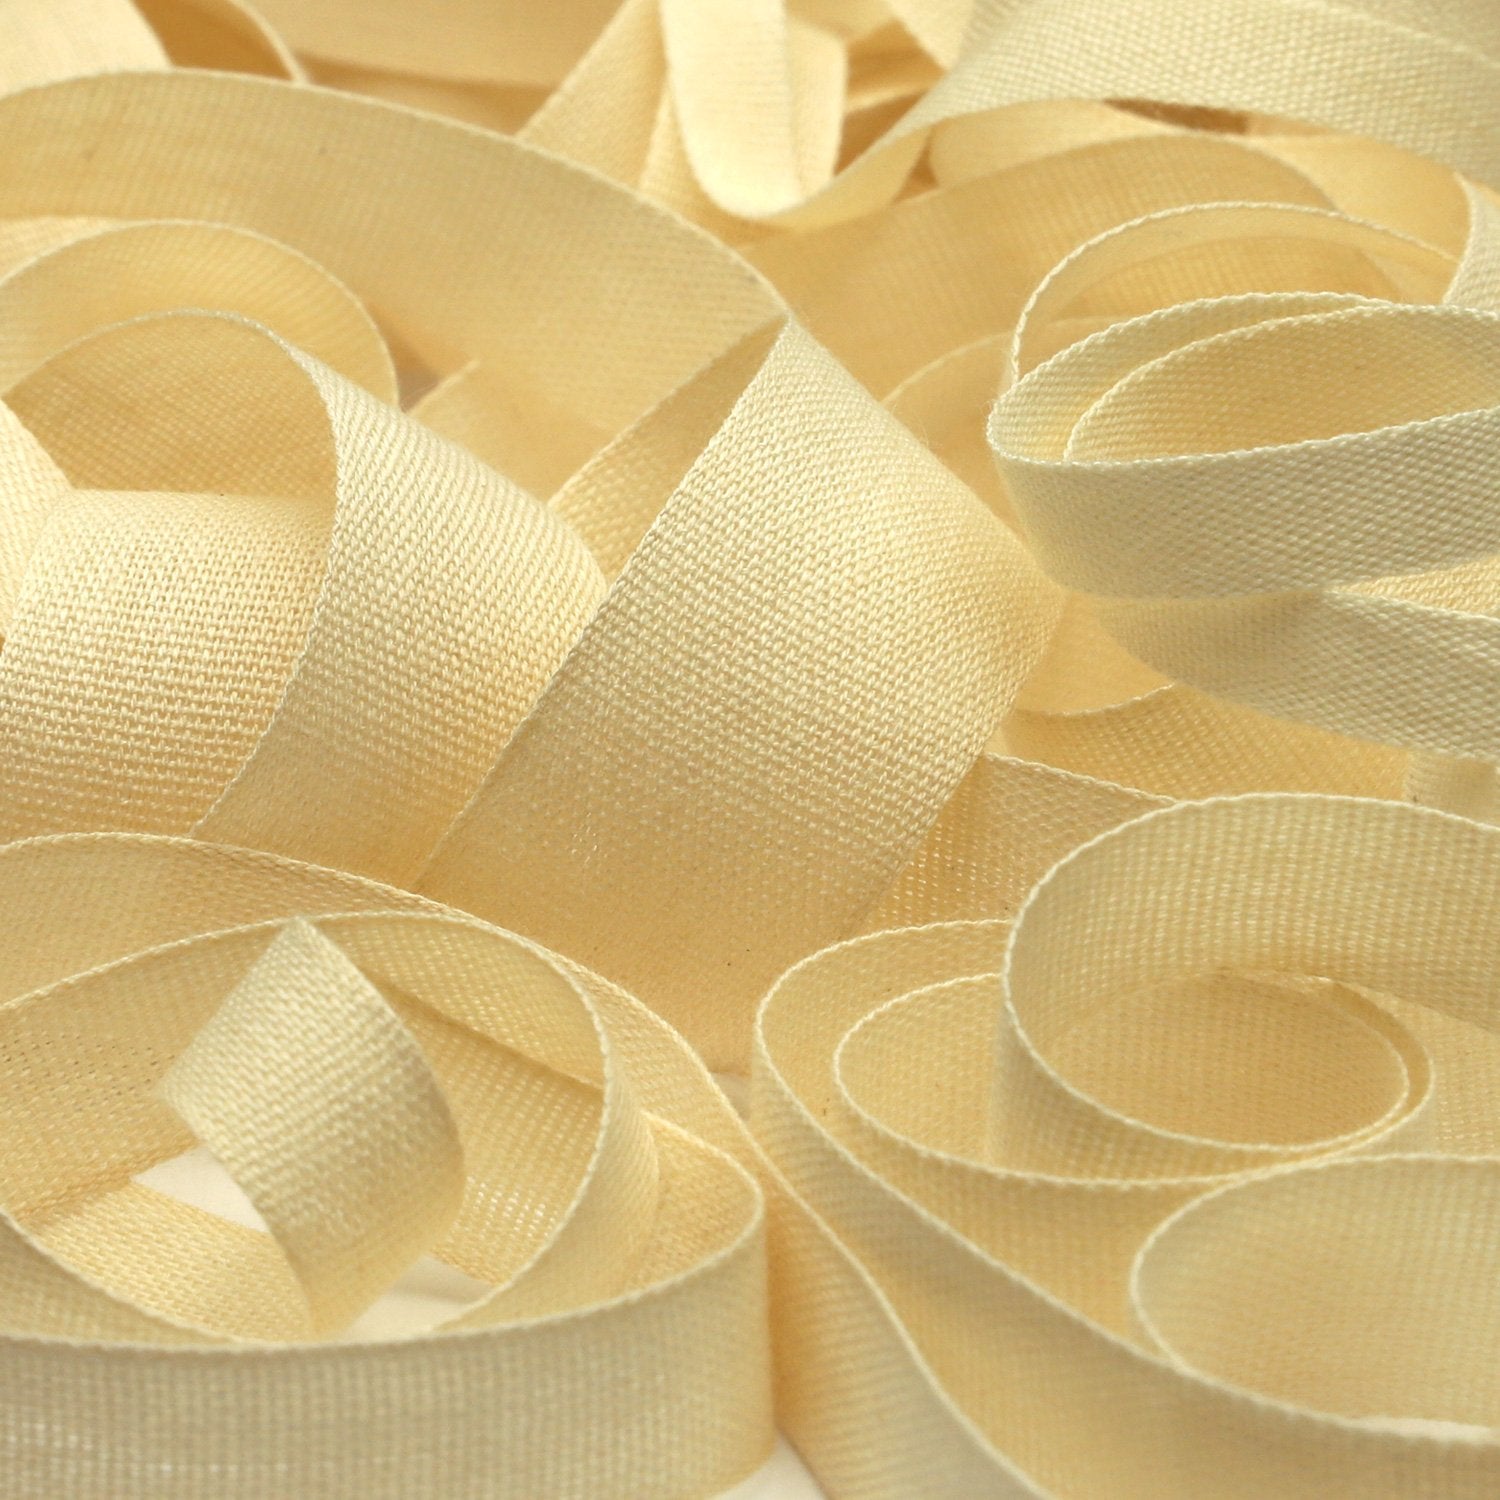 FUJIYAMA RIBBON Organic Cotton Taffeta Ribbon 6mm Ecru 9.14 Meters Roll